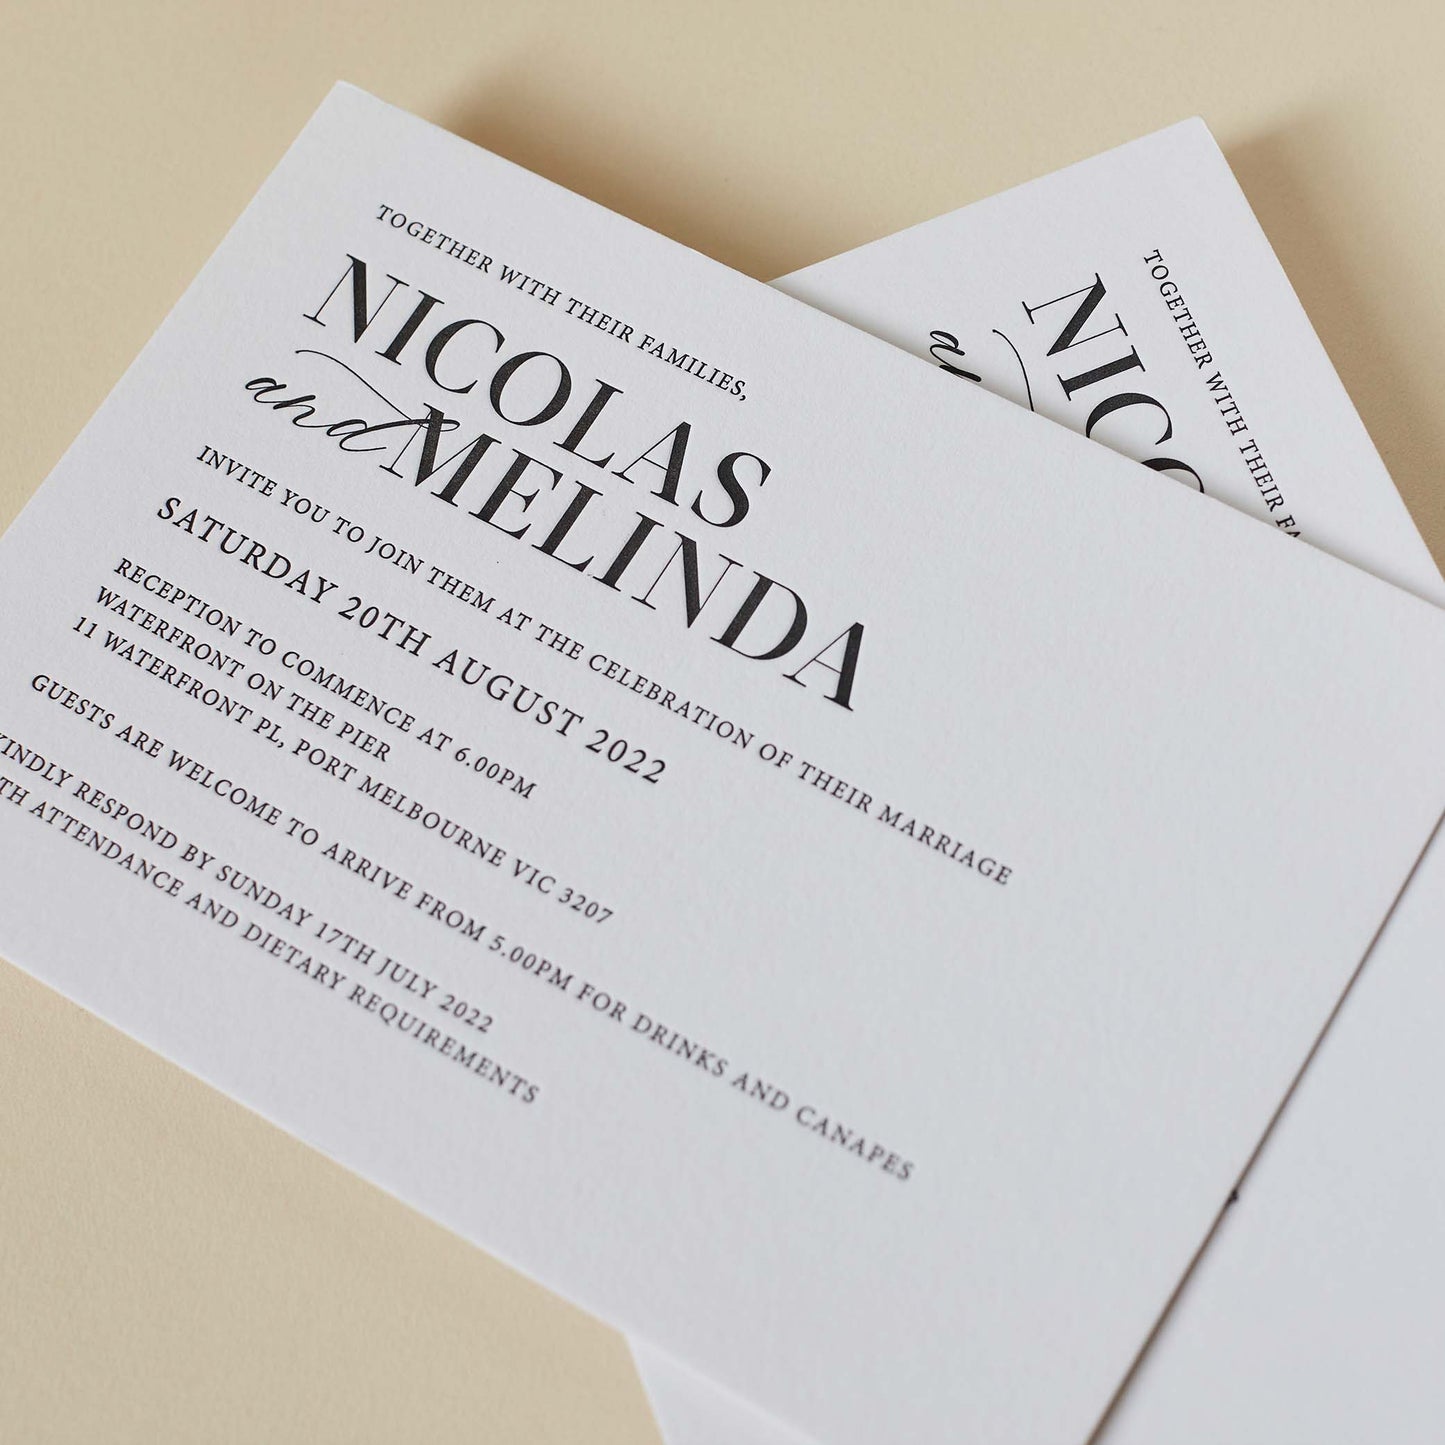 Melinda and Nicolas Invitation